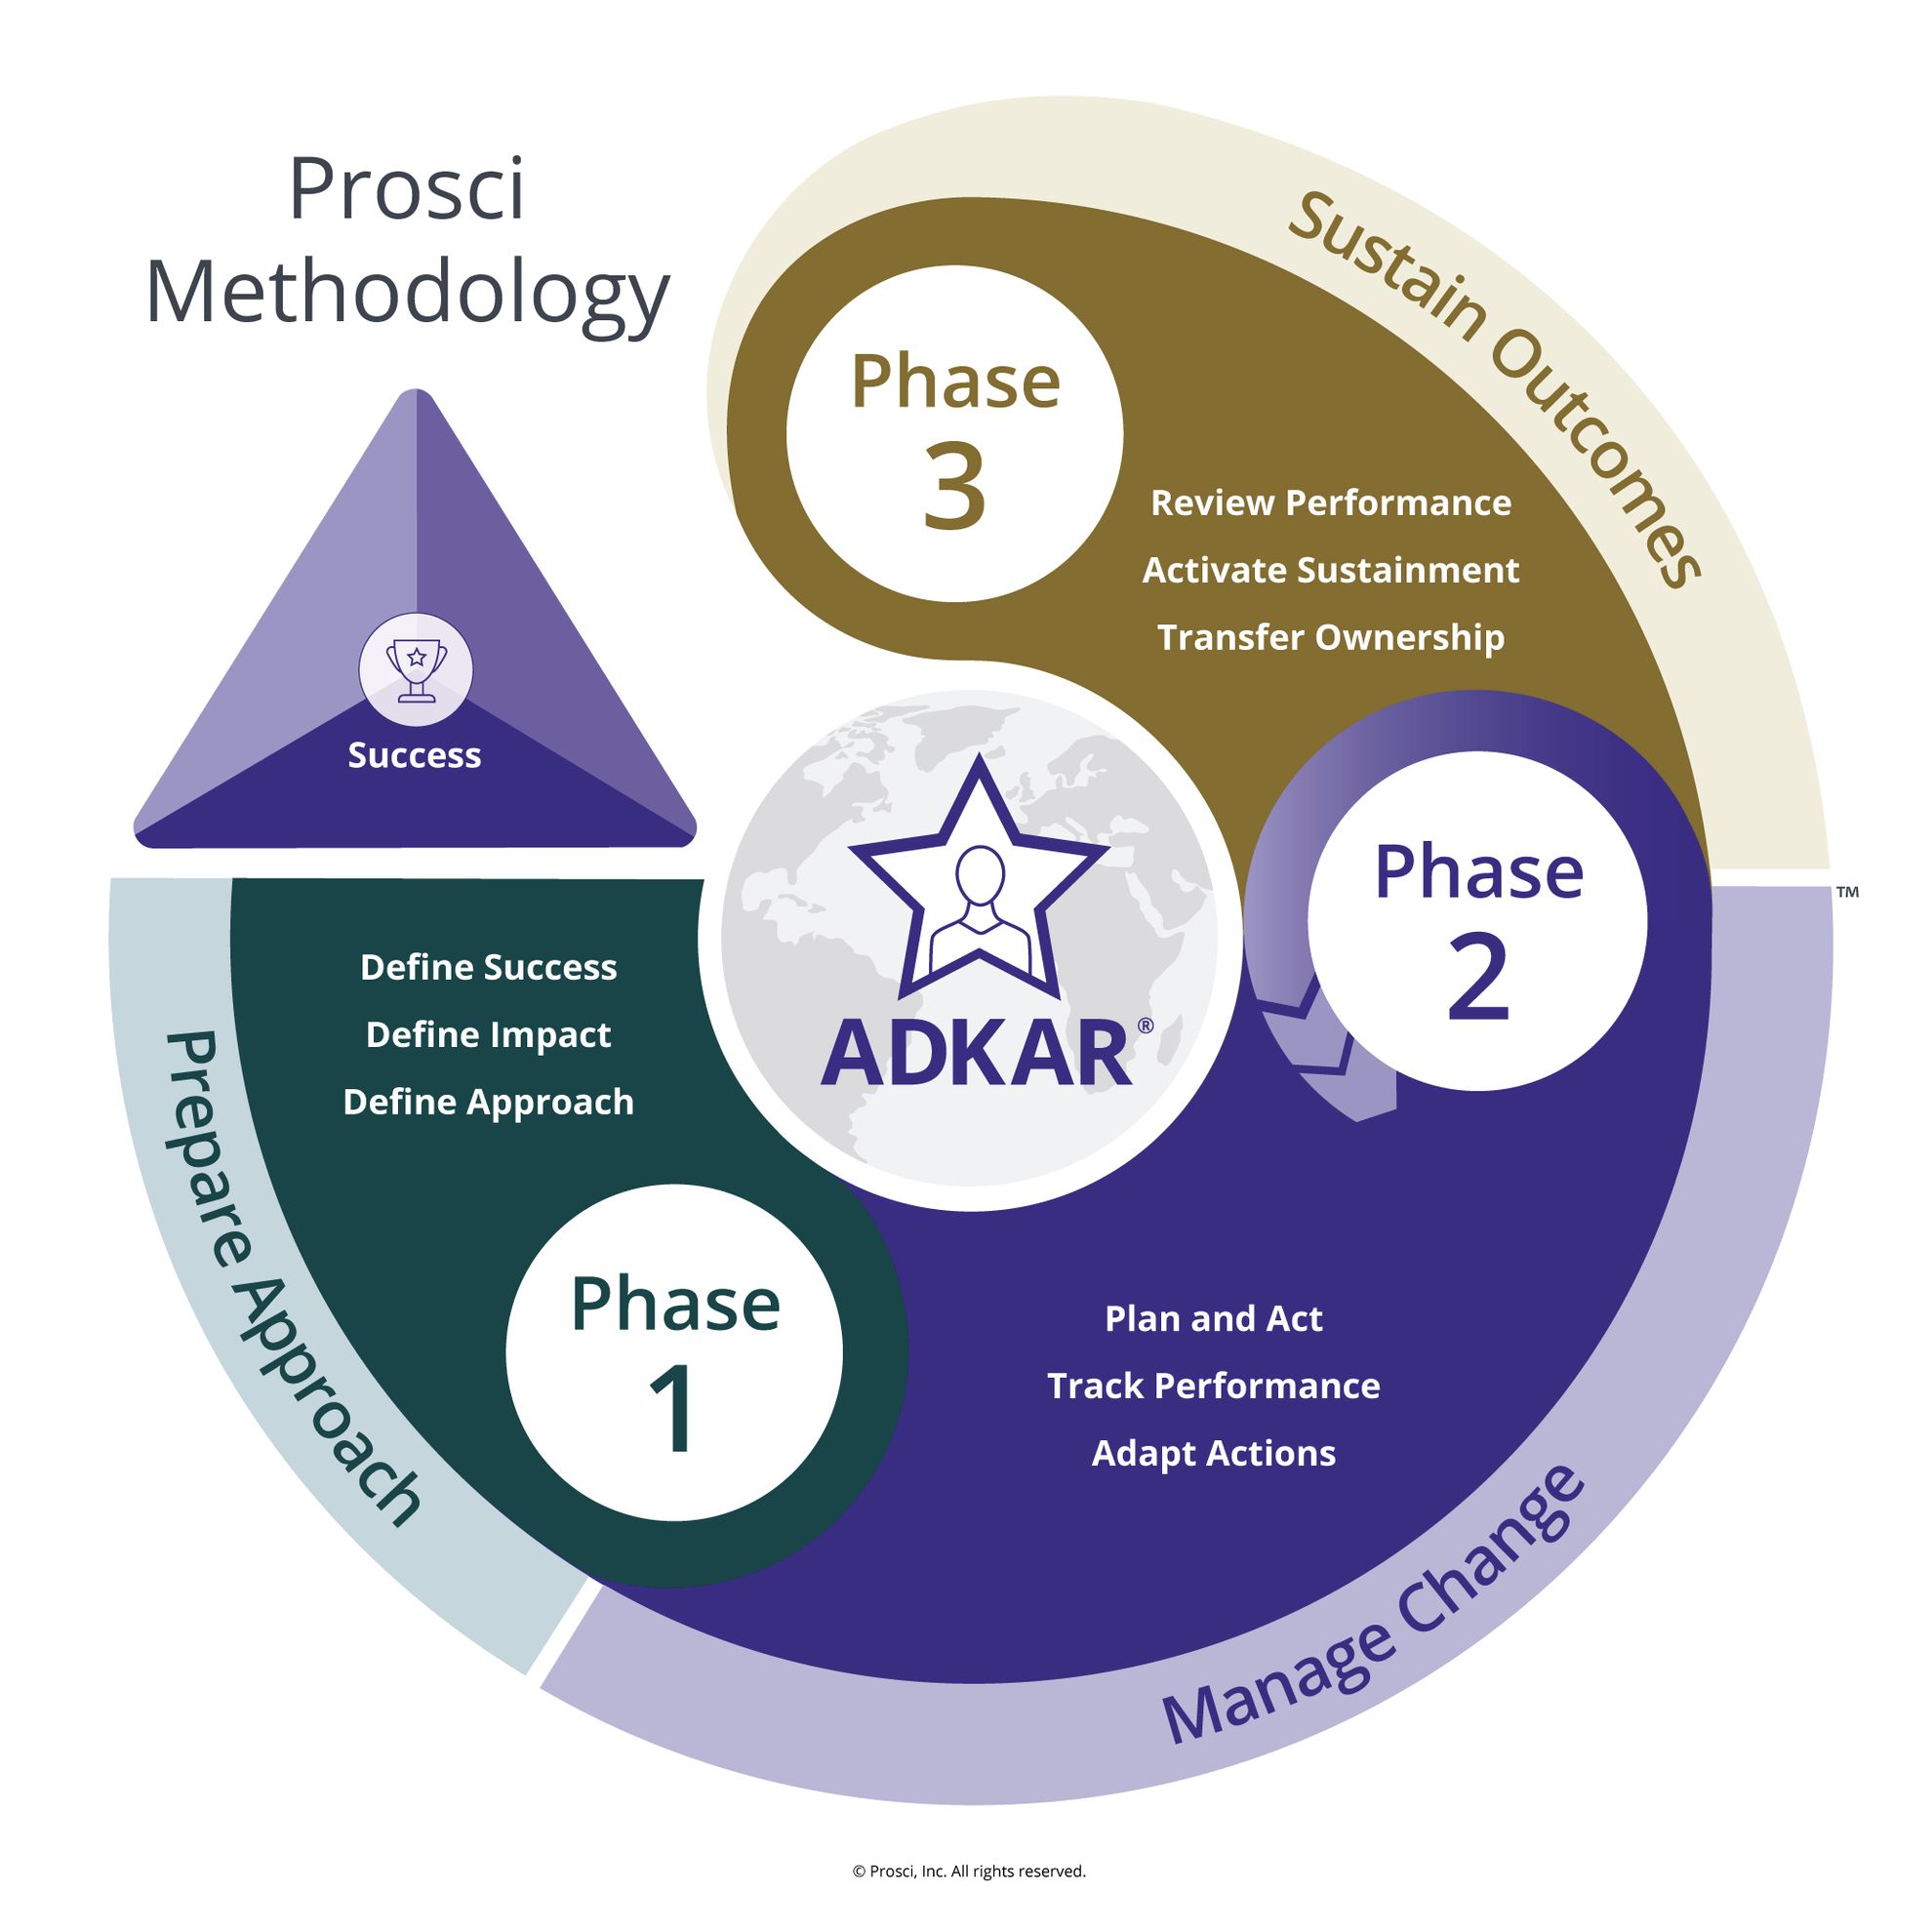 Prosci methodology diagram